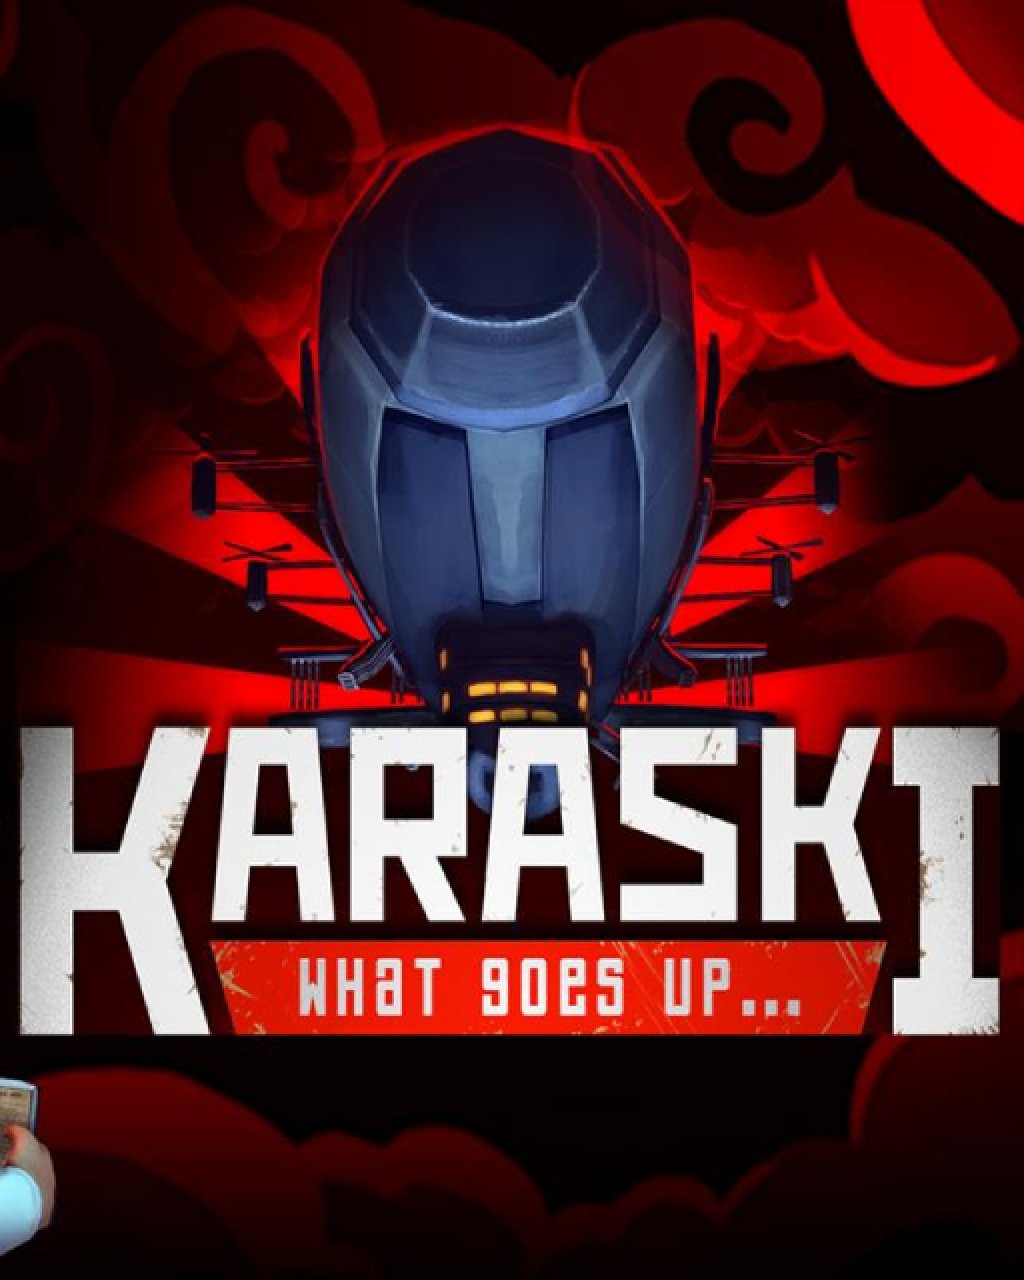 Karaski What Goes Up...